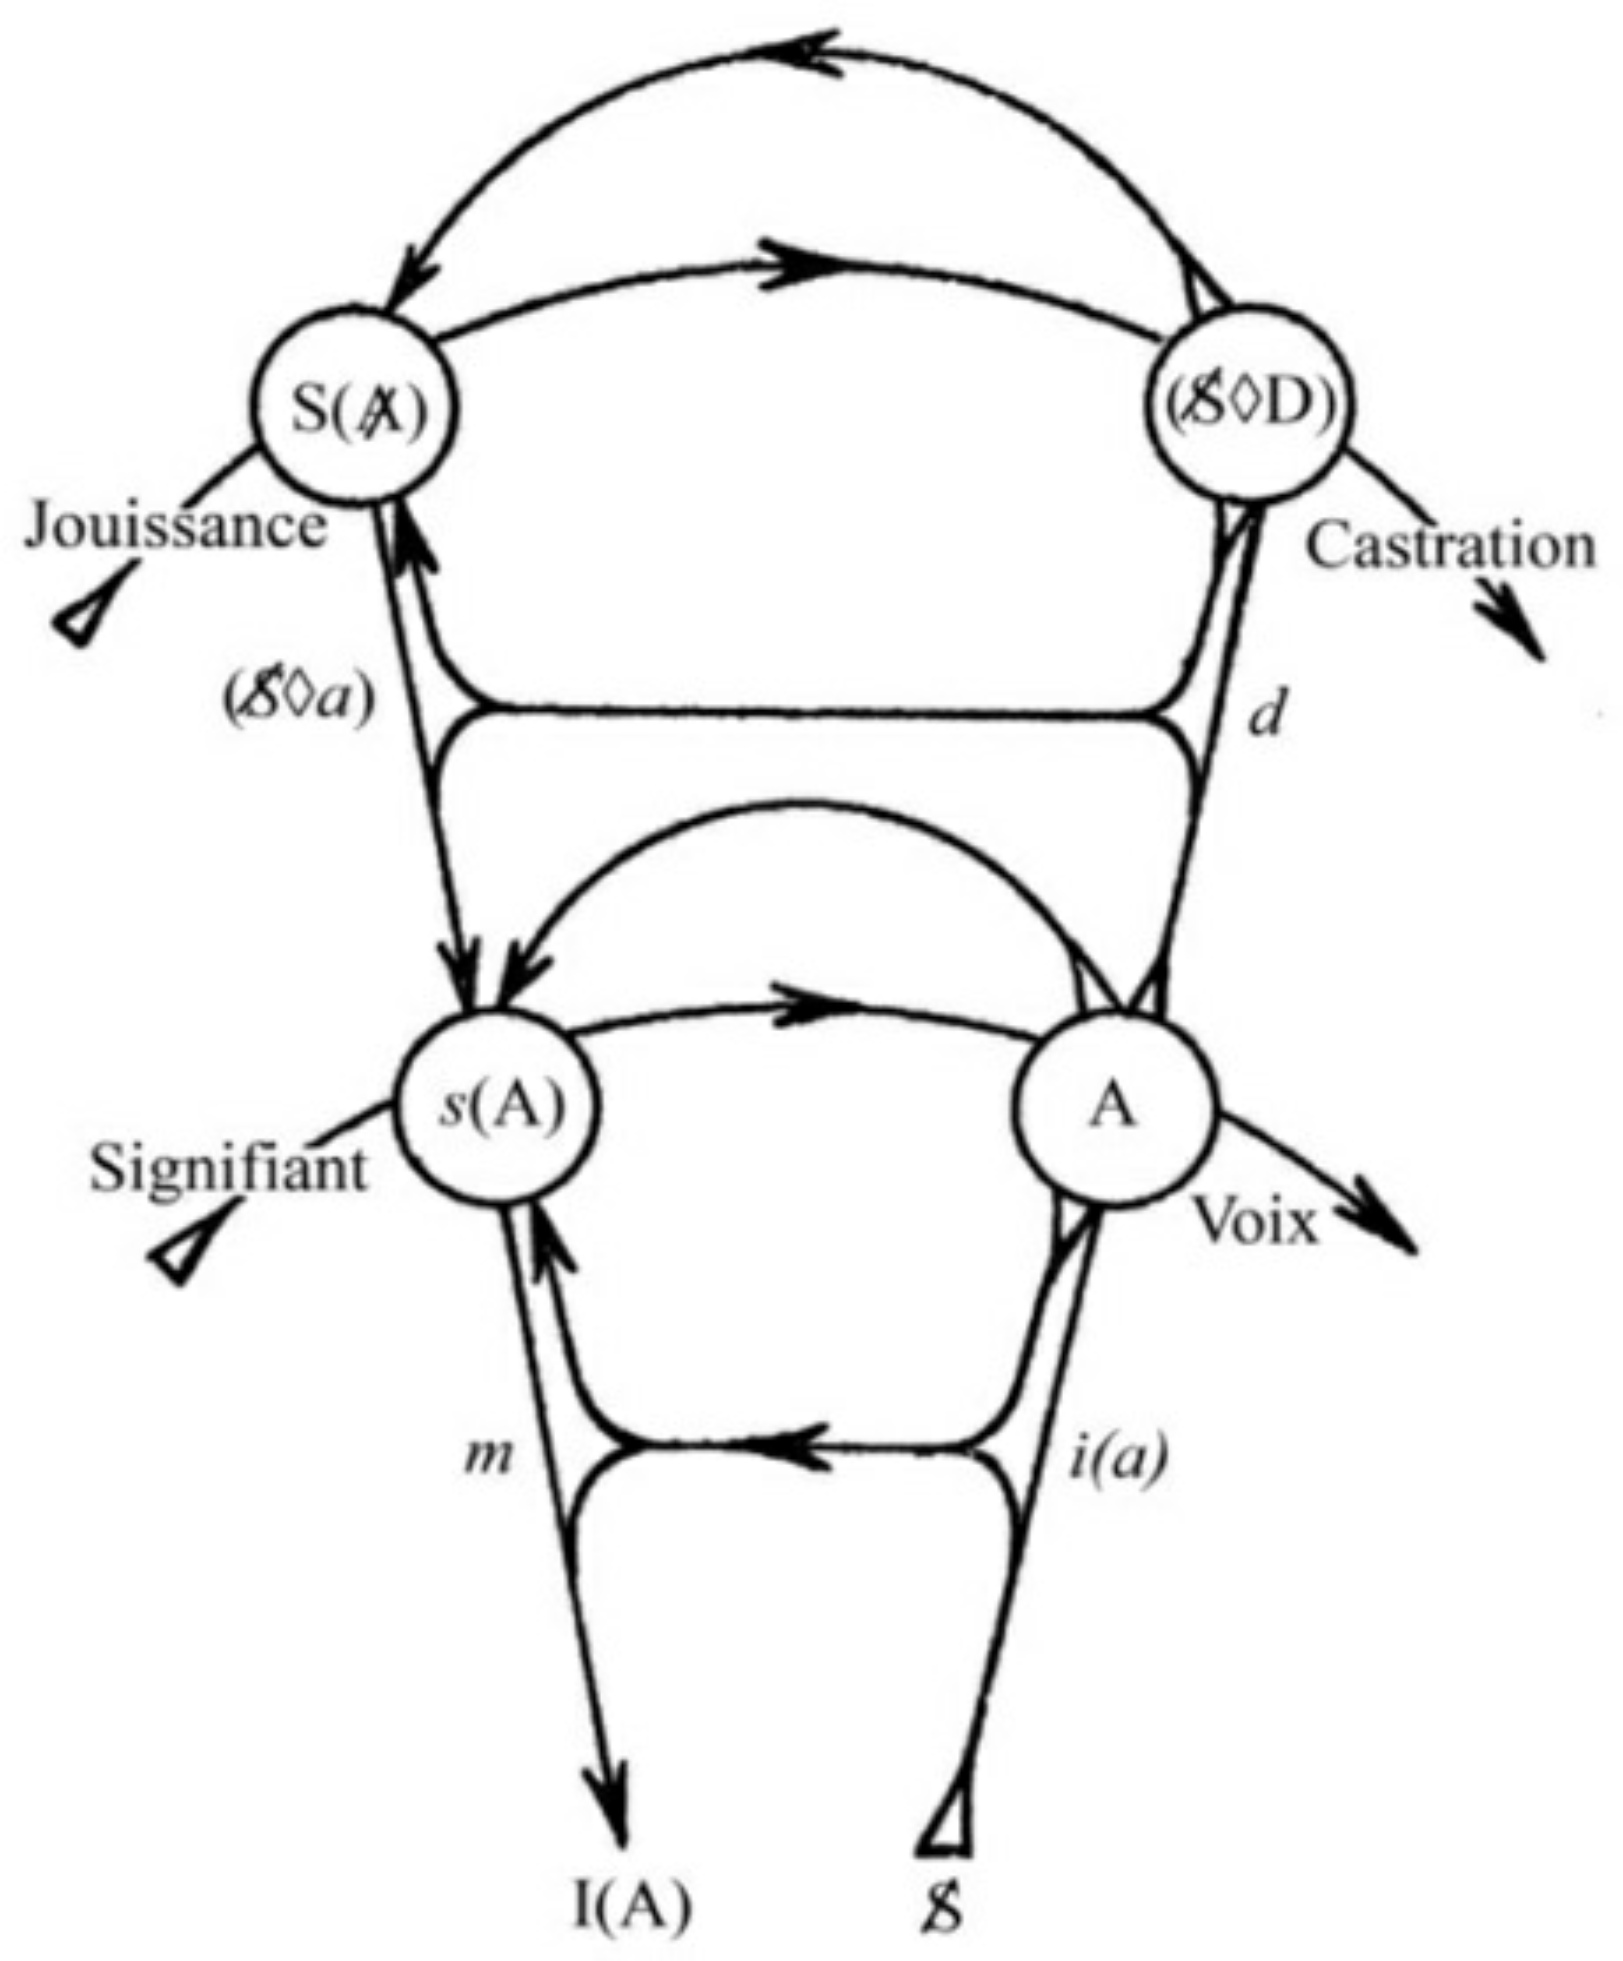 Lacan complete diagram